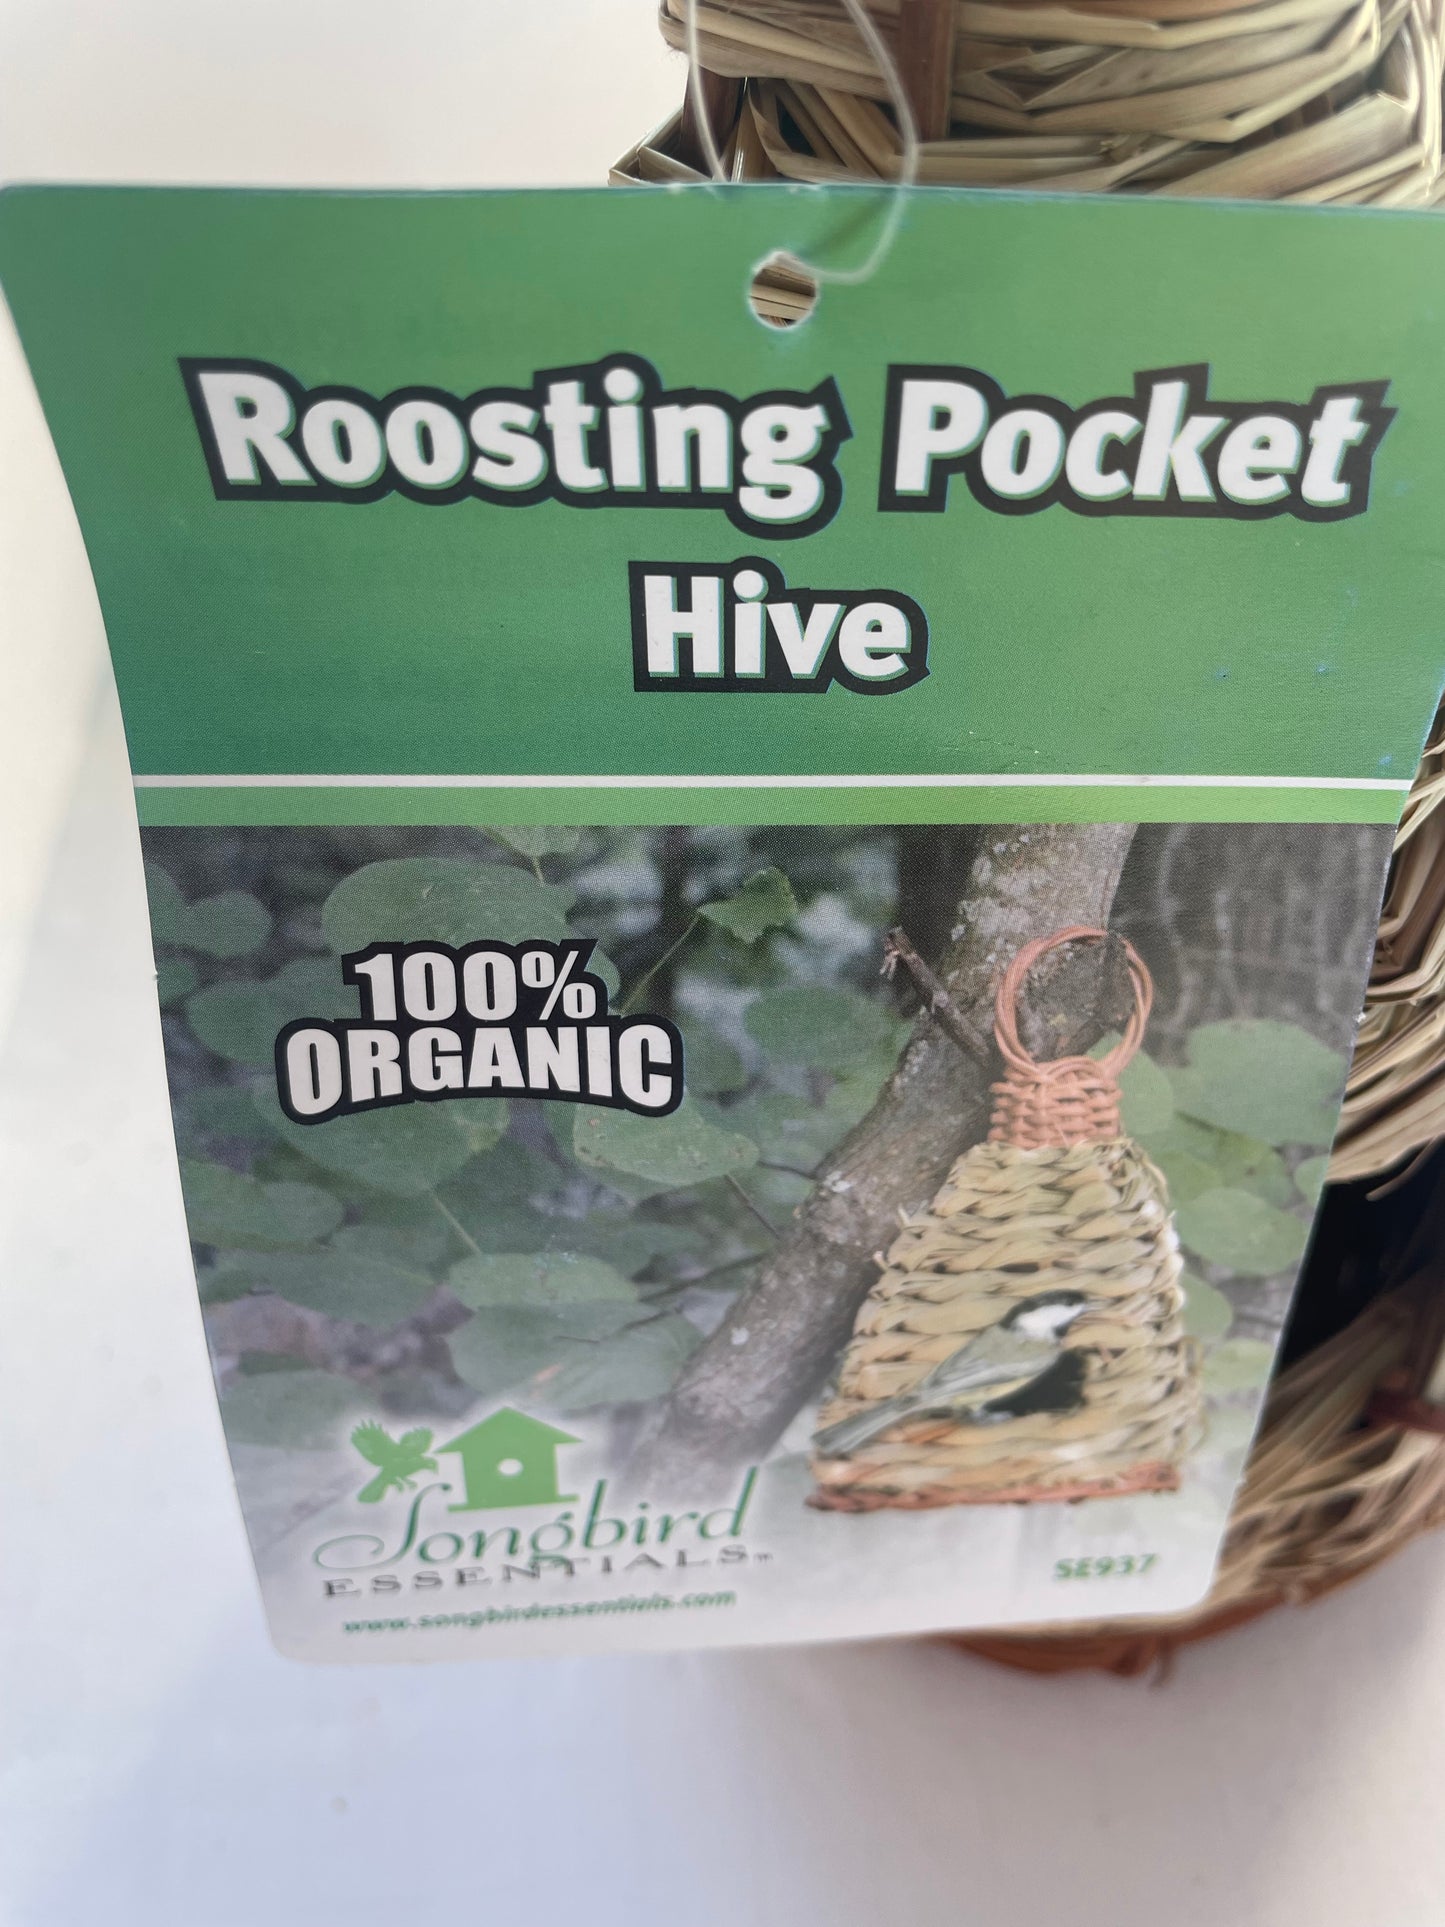 Roosting Pocket Hive